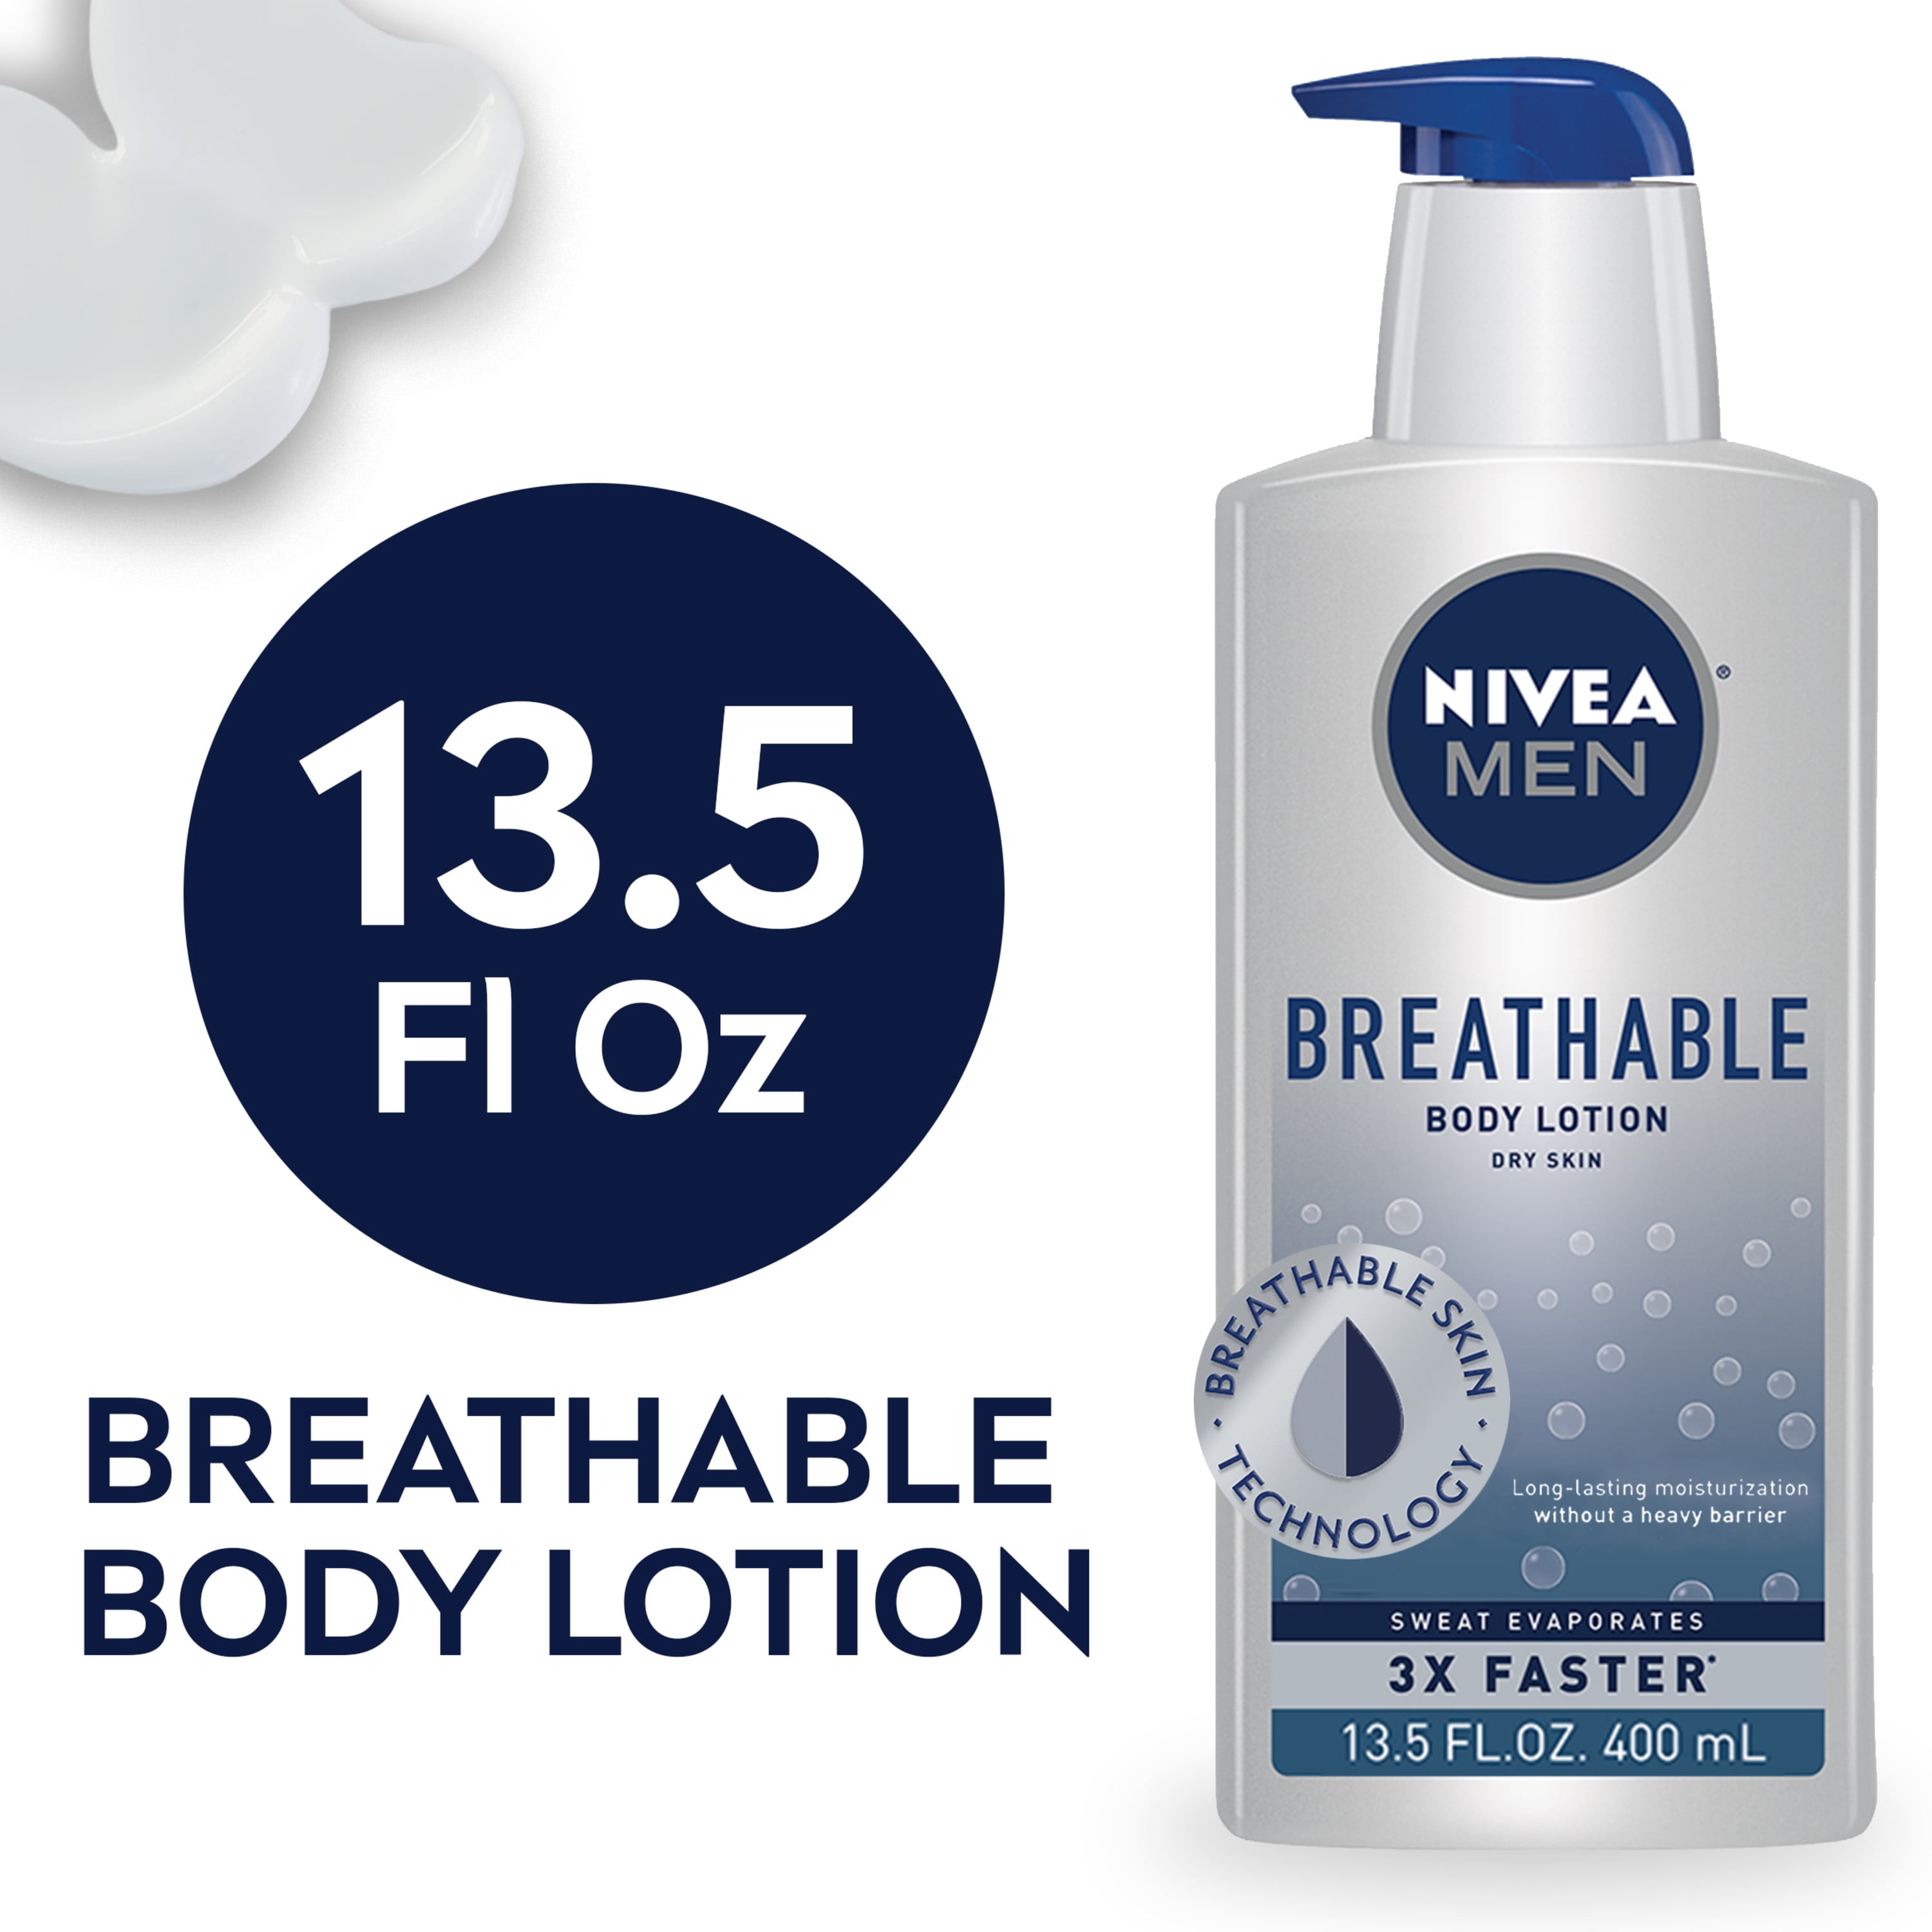 NIVEA MEN Breathable Body Lotion, 13.5 Fl Oz Bottle